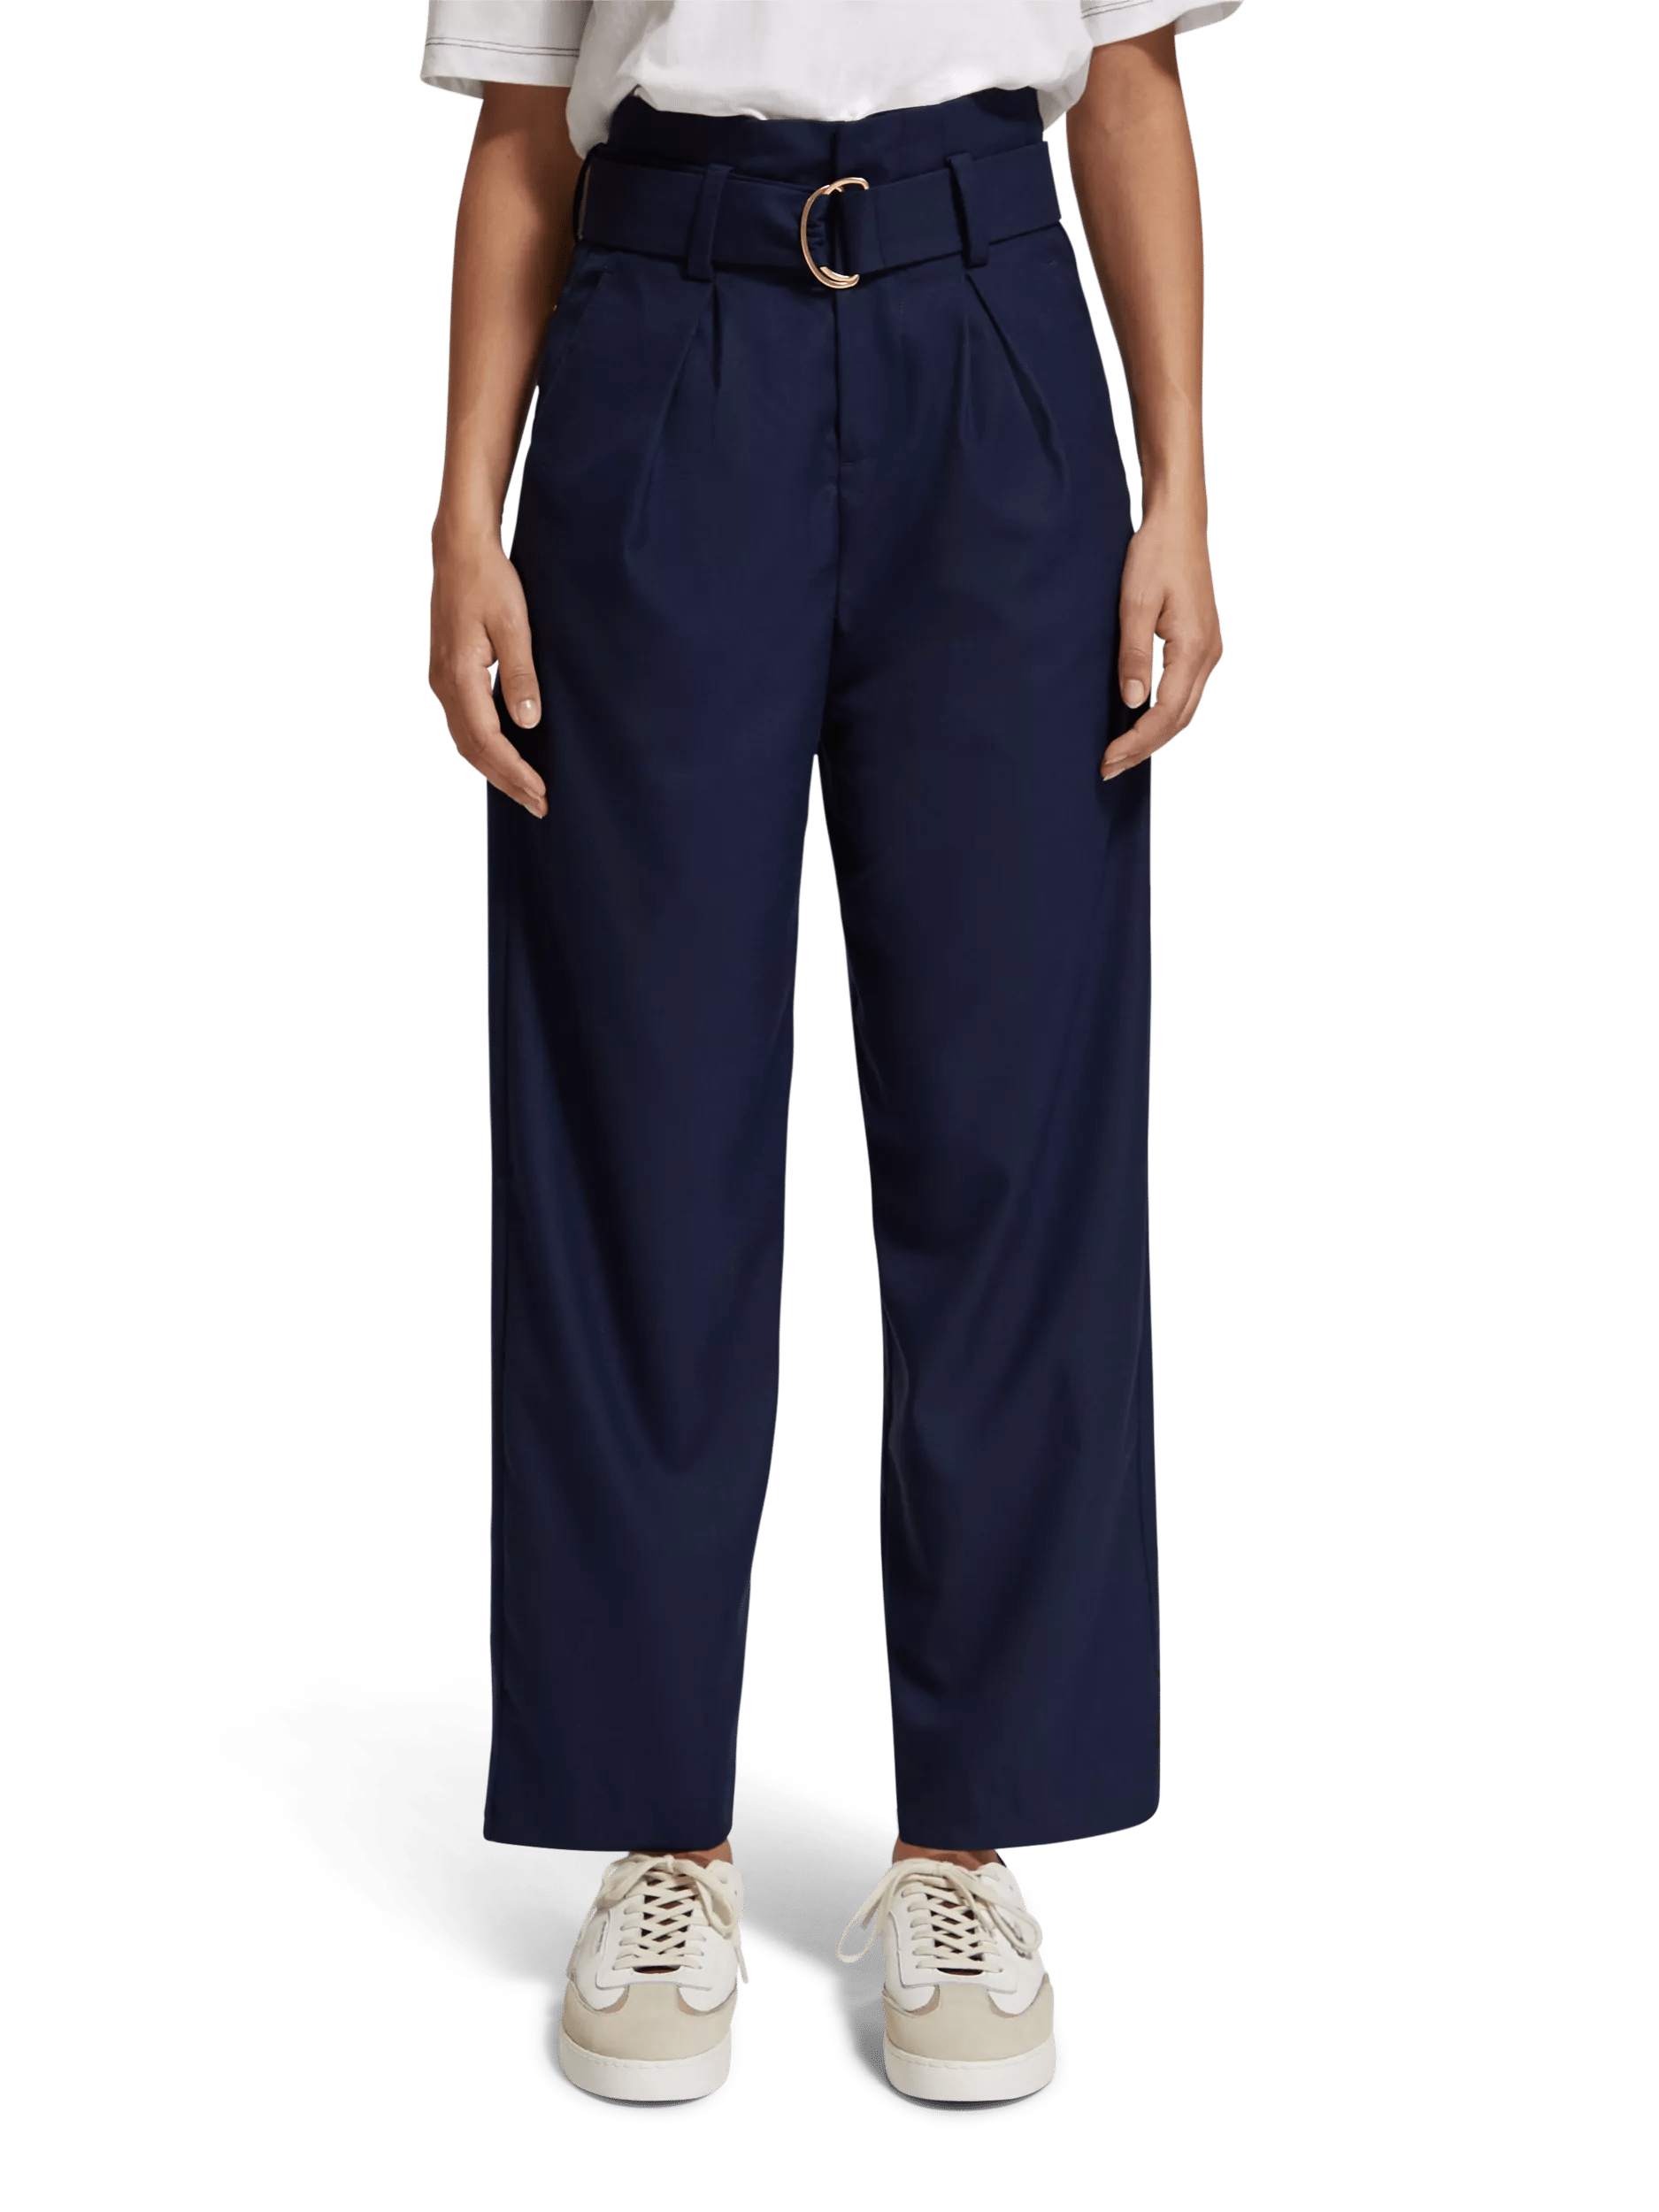 Mitankcoo Women's ActiveFlex Slim-fit Jogger Pants - Elastic High Waist  Casual Cuffed Trousers 